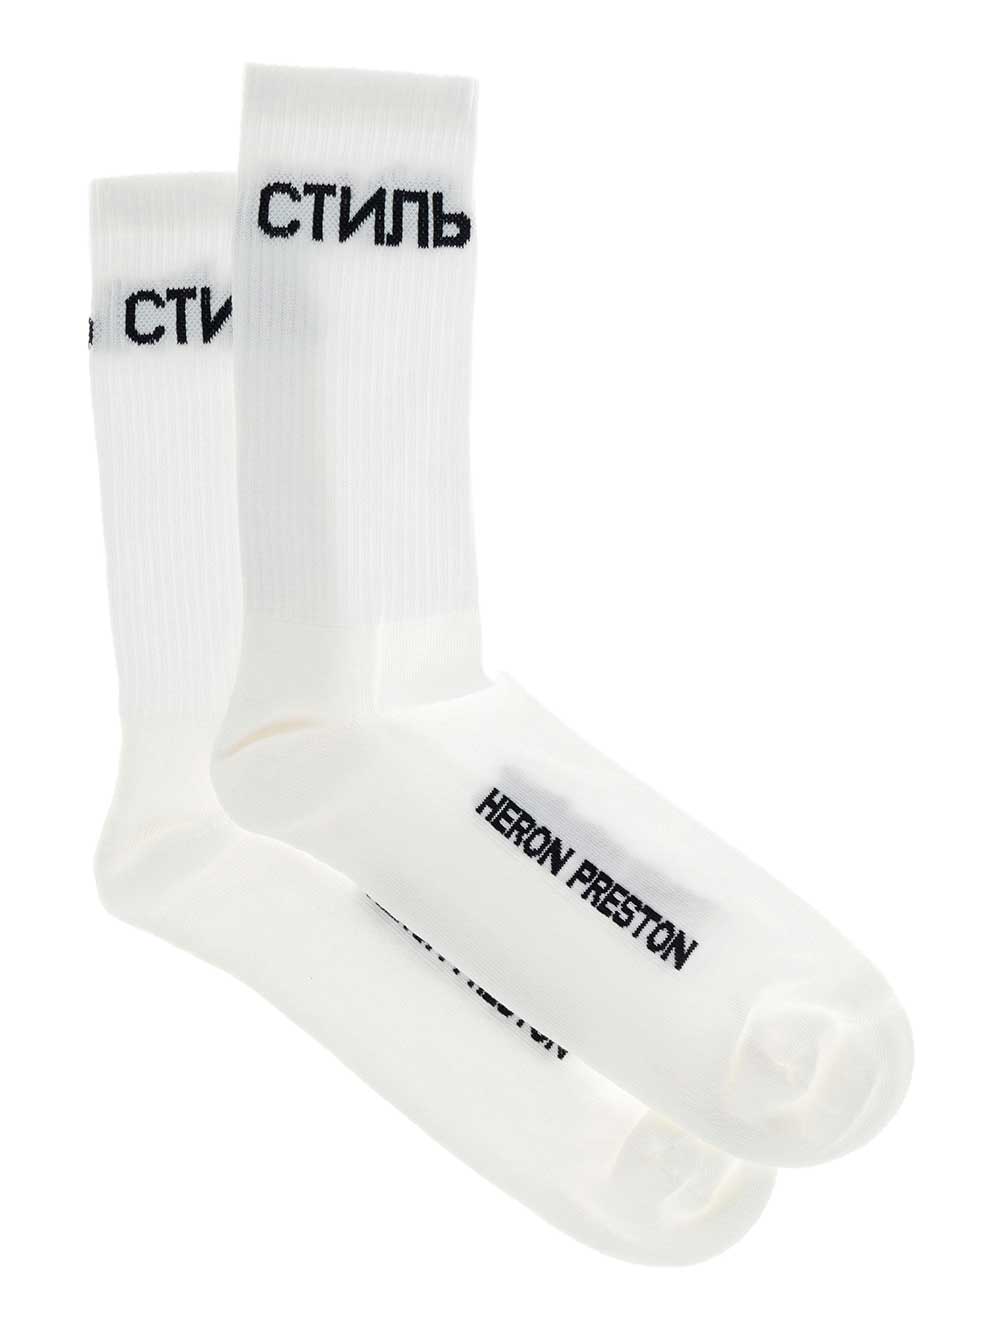 HERON PRESTON White Cotton Socks With Ctnmb Print